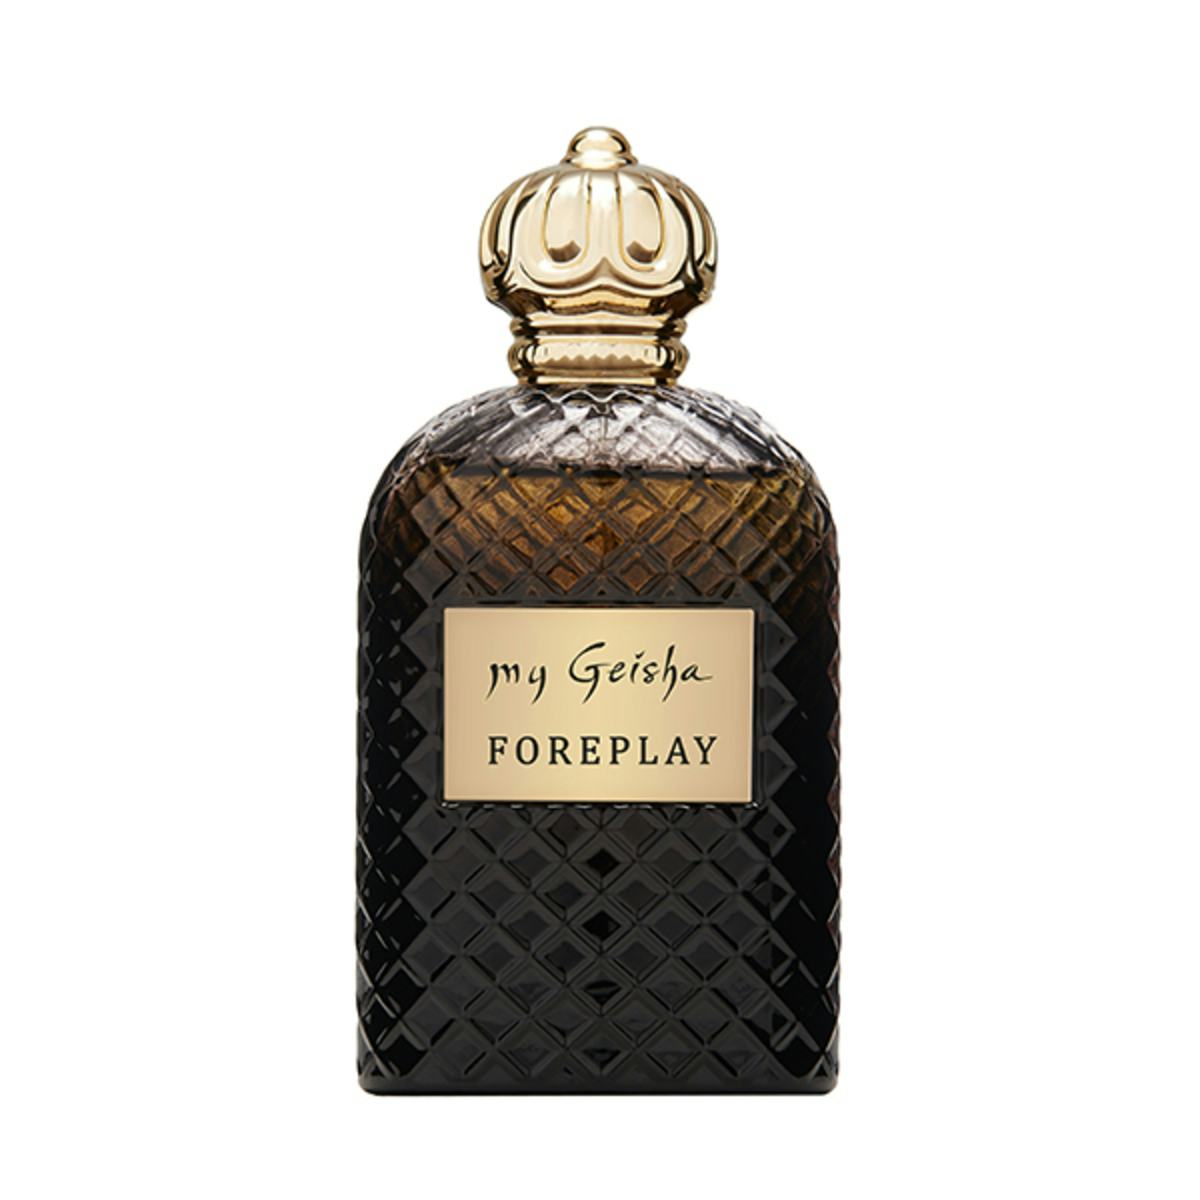 Extrait de parfum "Foreplay" 100 ml, My Geisha Genève, Genève, image 1 | Mimelis